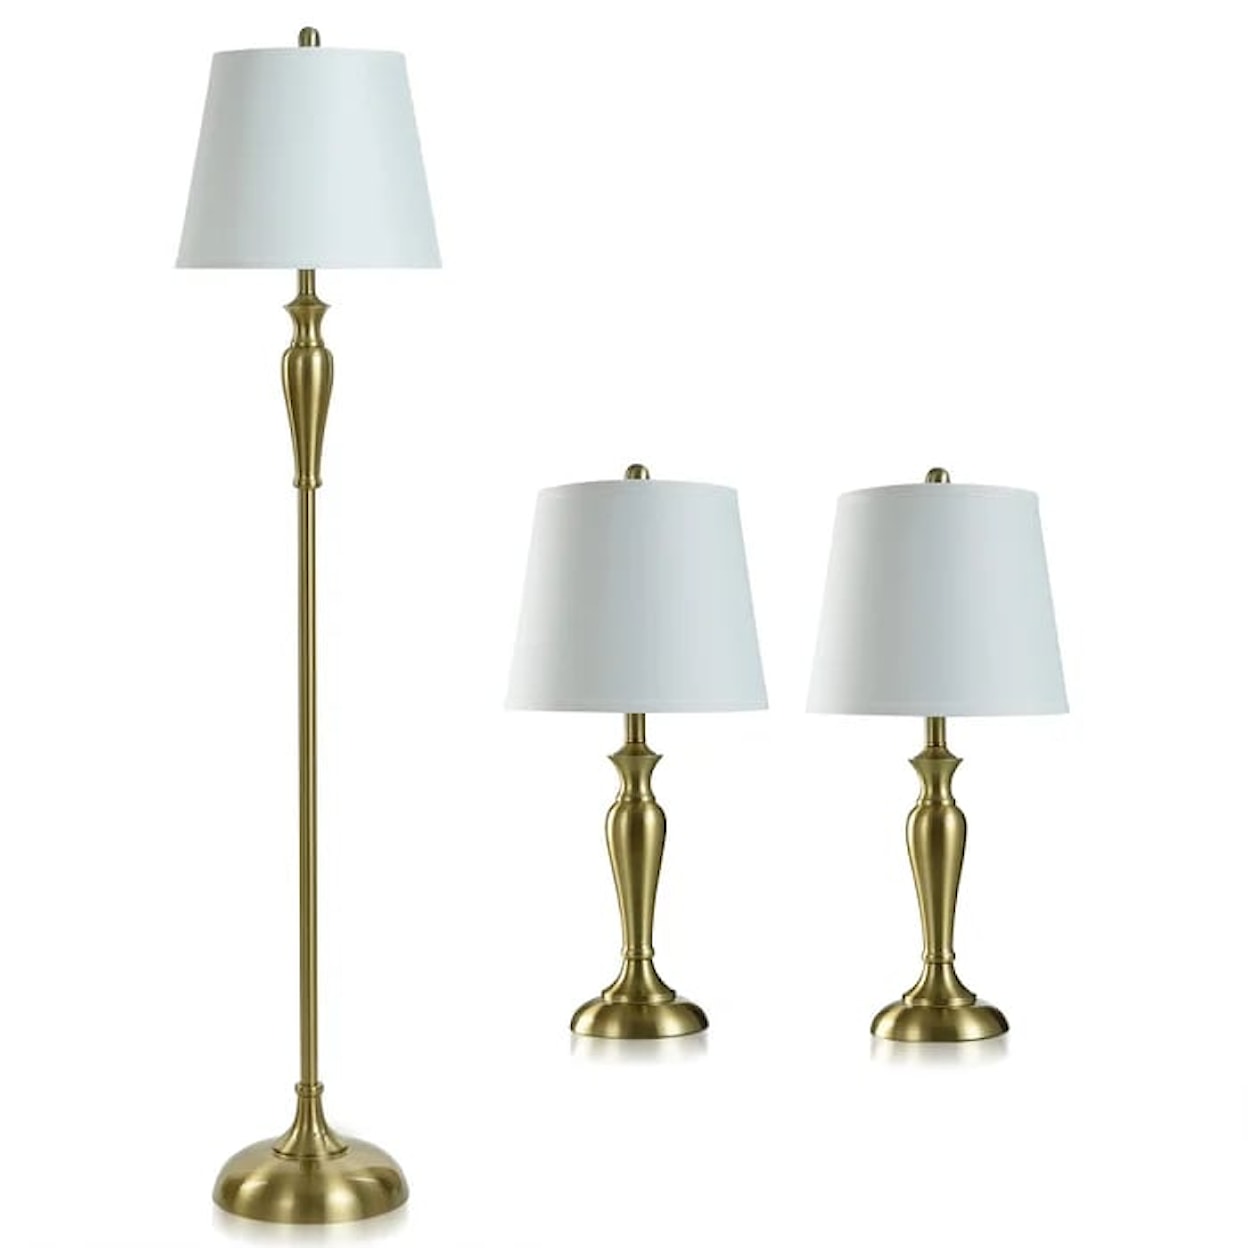 StyleCraft Accessories Antique Brass Set of 3 Lamps